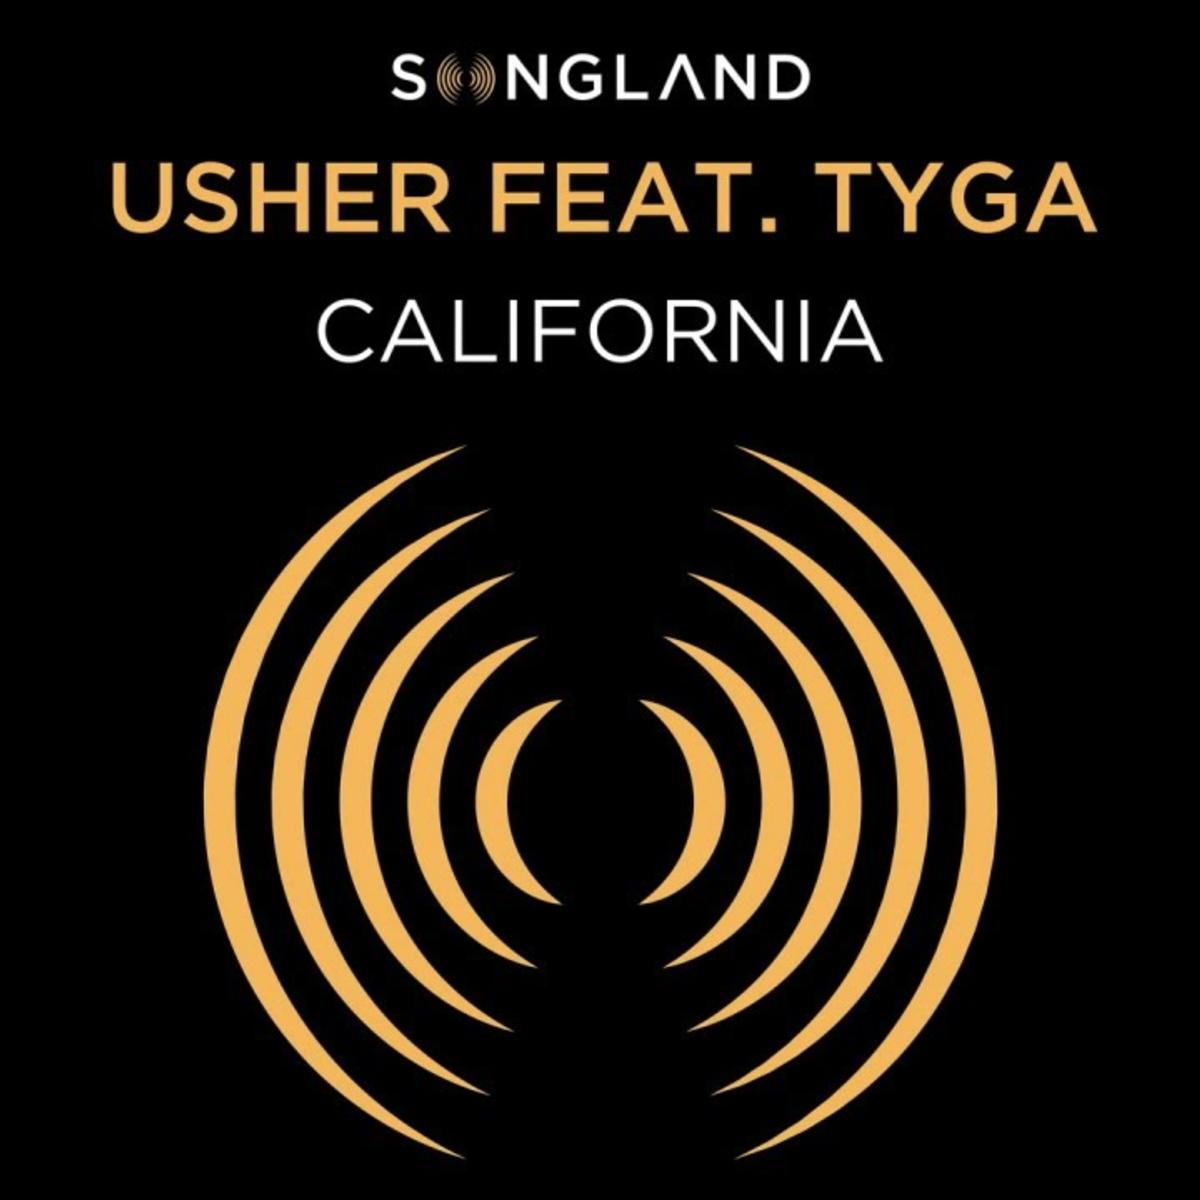 Usher Feat. Tyga - California 14